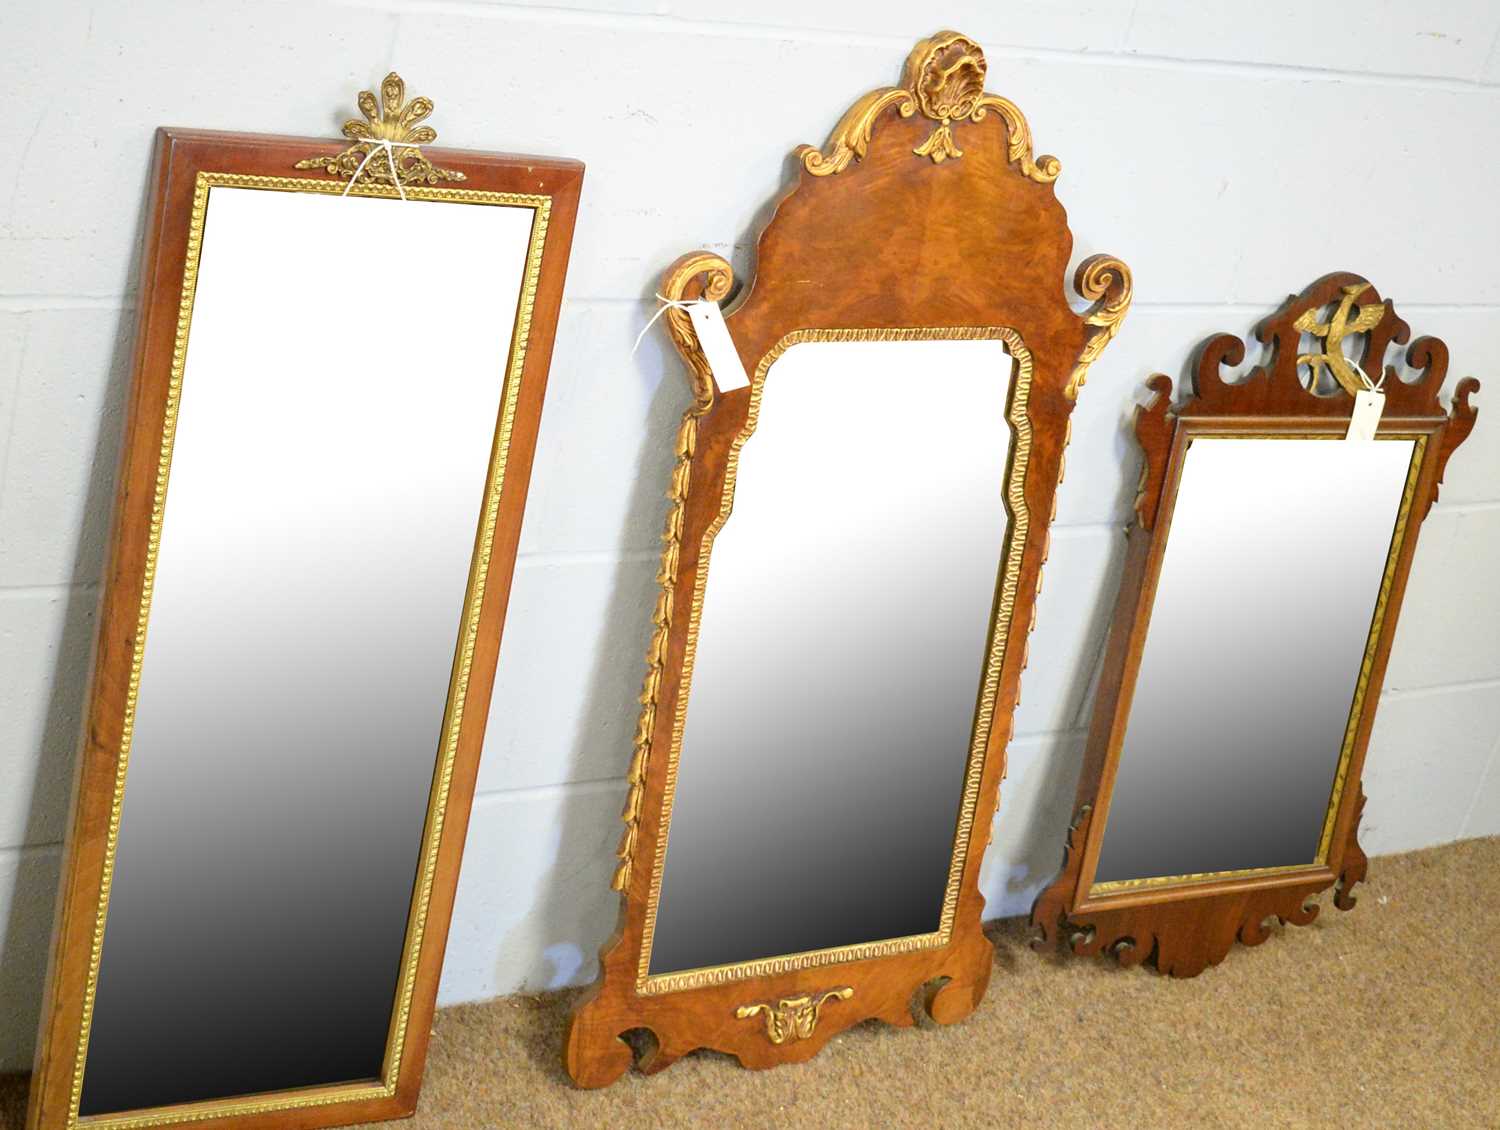 Three decorative wall mirrors - Image 2 of 2